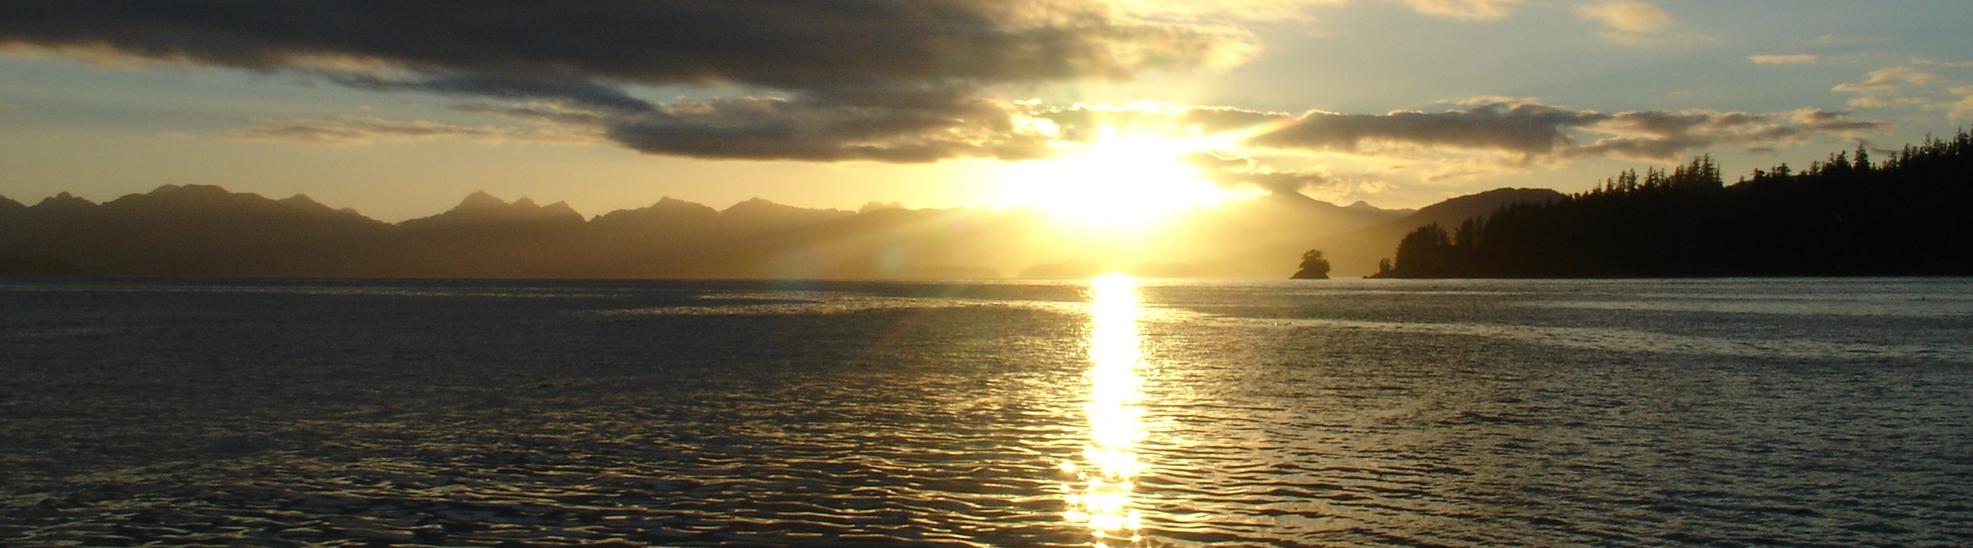 Gwaii Haanas sunset (view from hotsprings island)